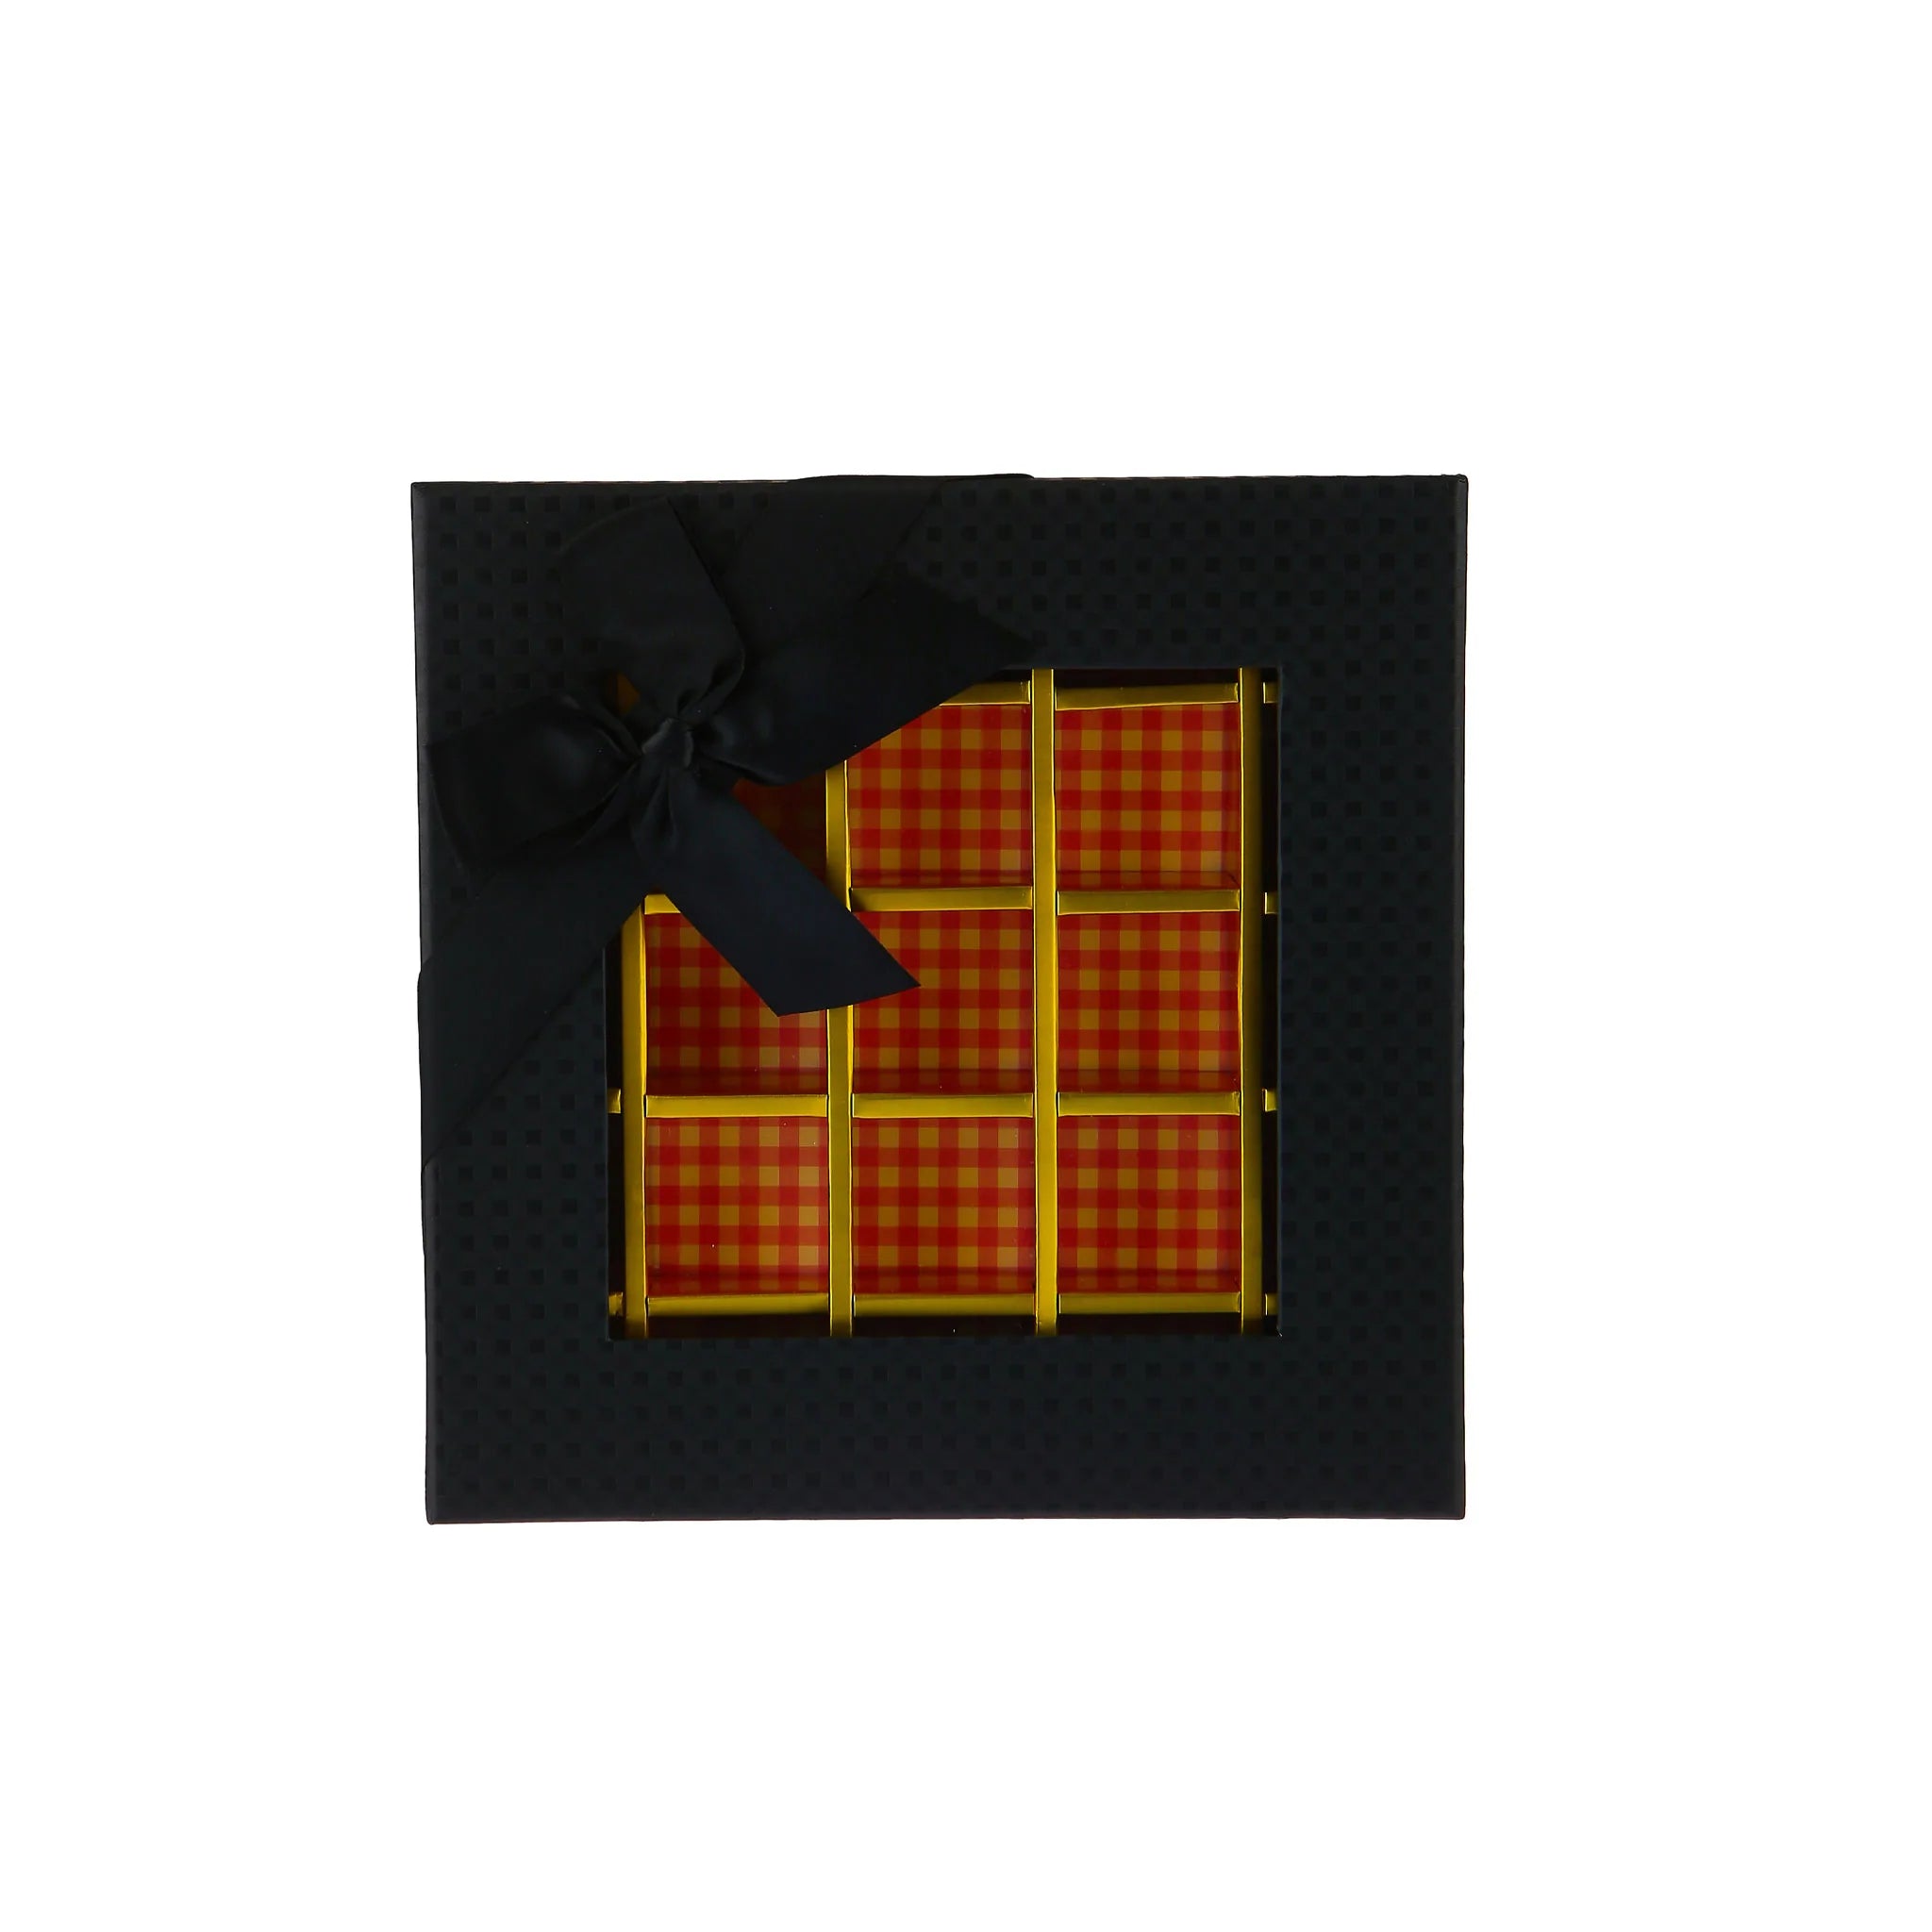 48 Pieces Square Black Chocolate Gift Box Shape 16 Division -17*17*4 cm